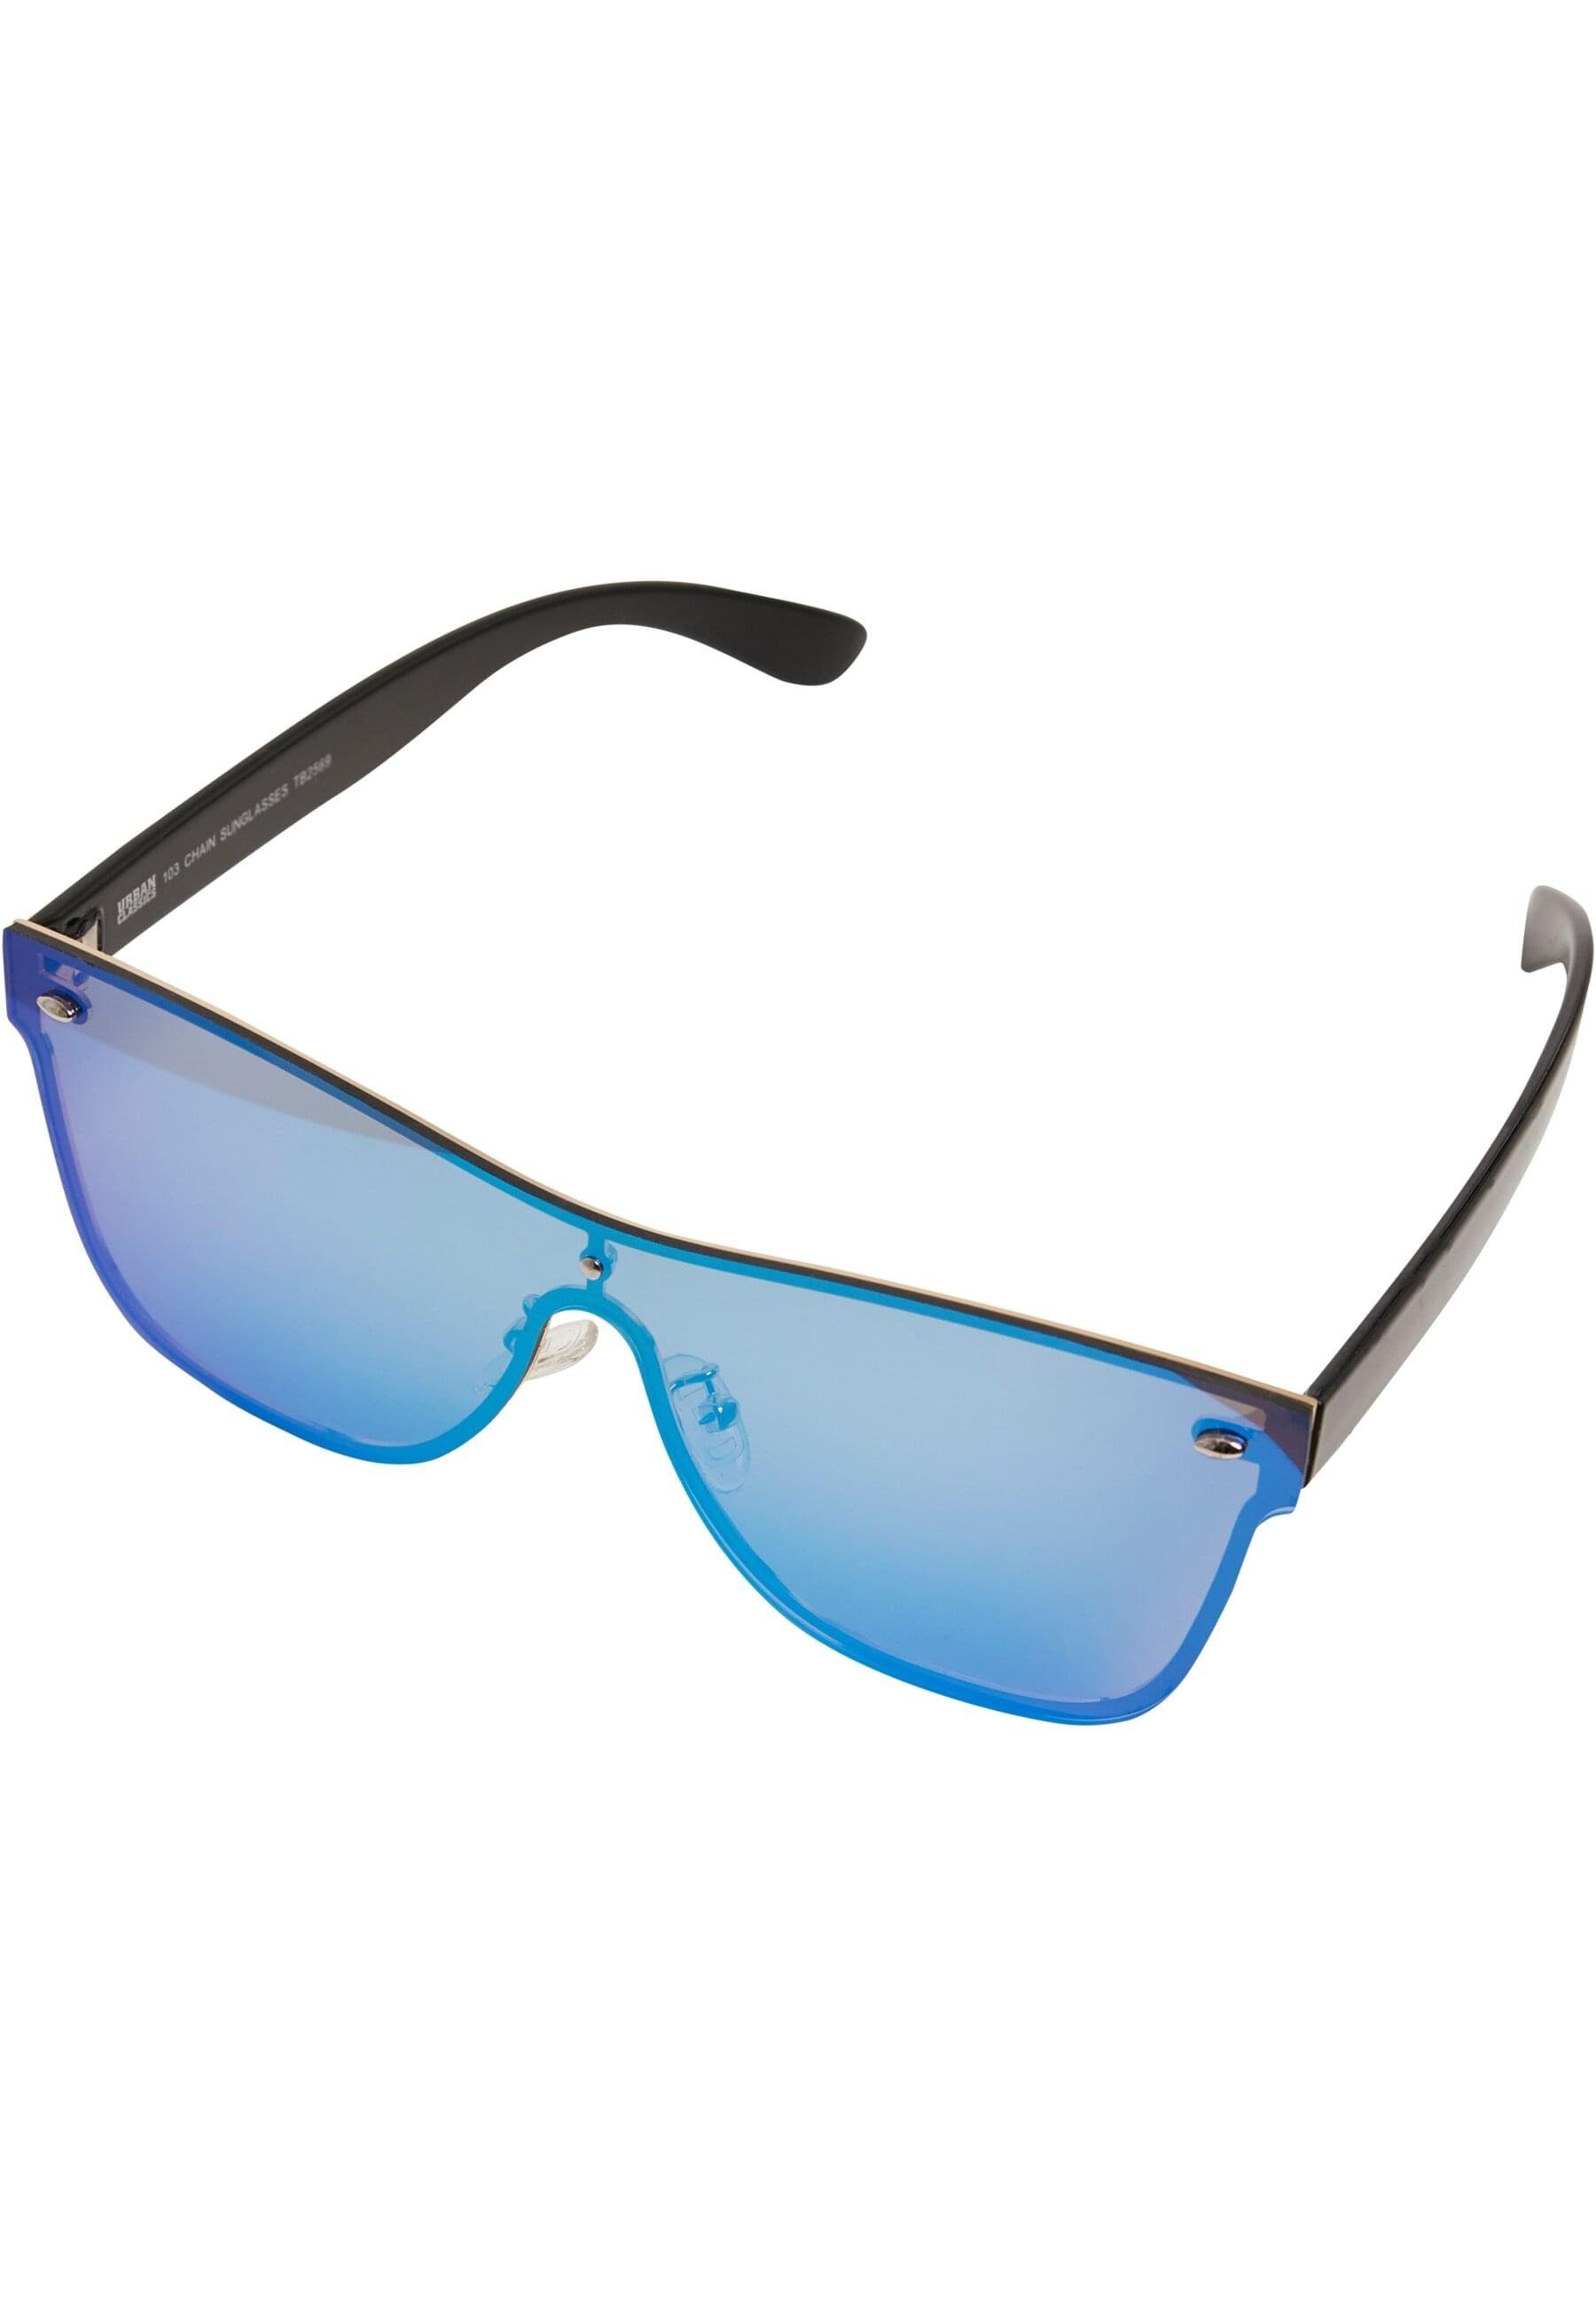 URBAN Sonnenbrille Unisex Sunglasses Chain CLASSICS blk/blue 103